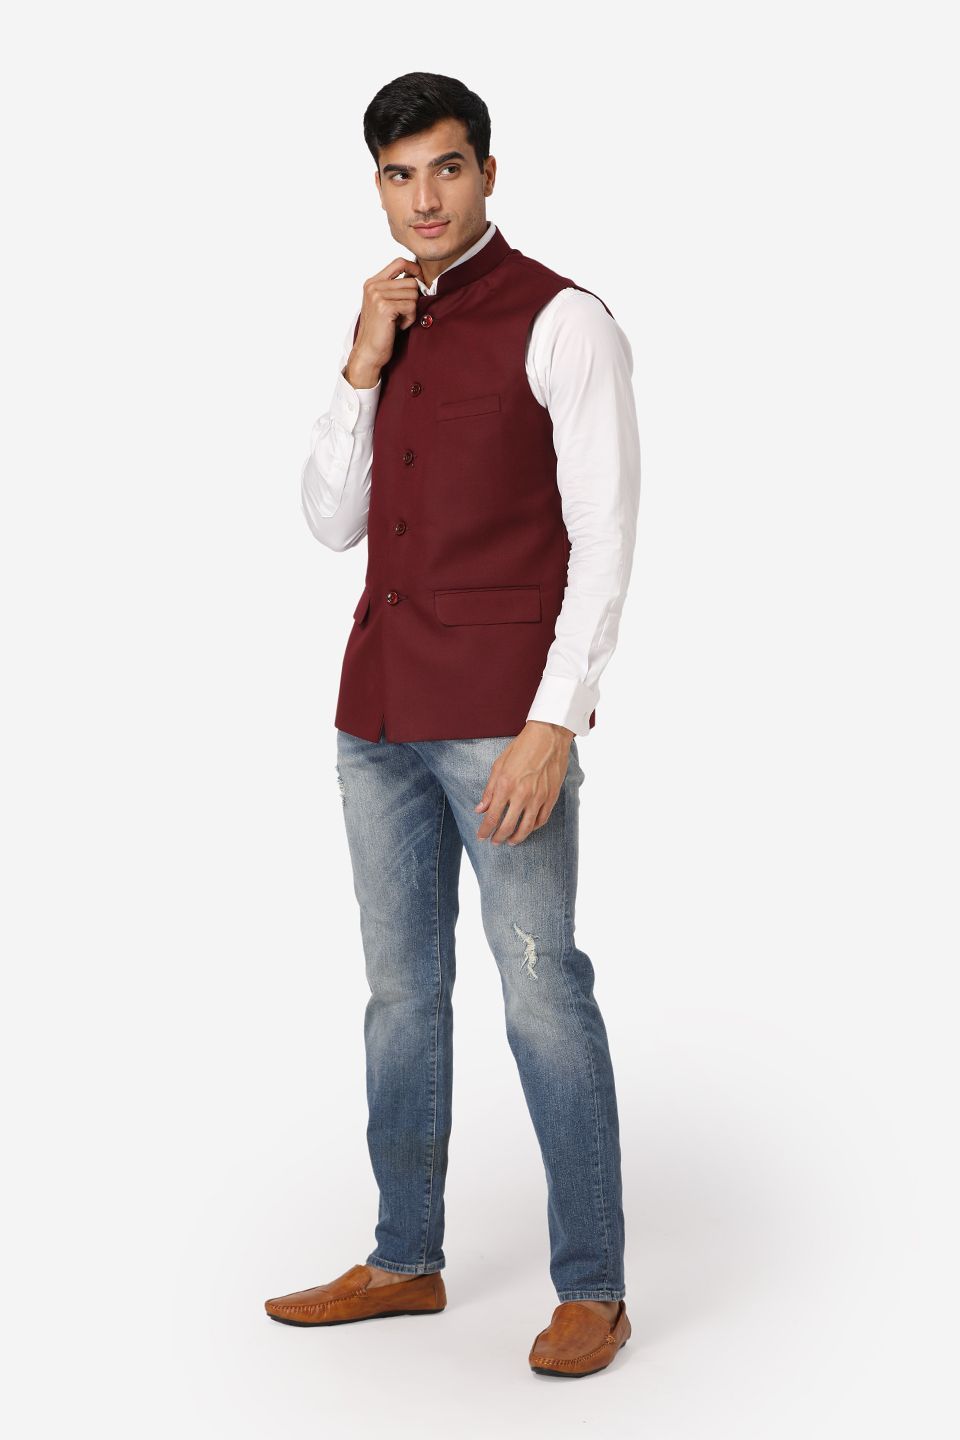 Wintage Men's Poly Cotton Festive and Casual Nehru Jacket Vest Waistcoat : Purple